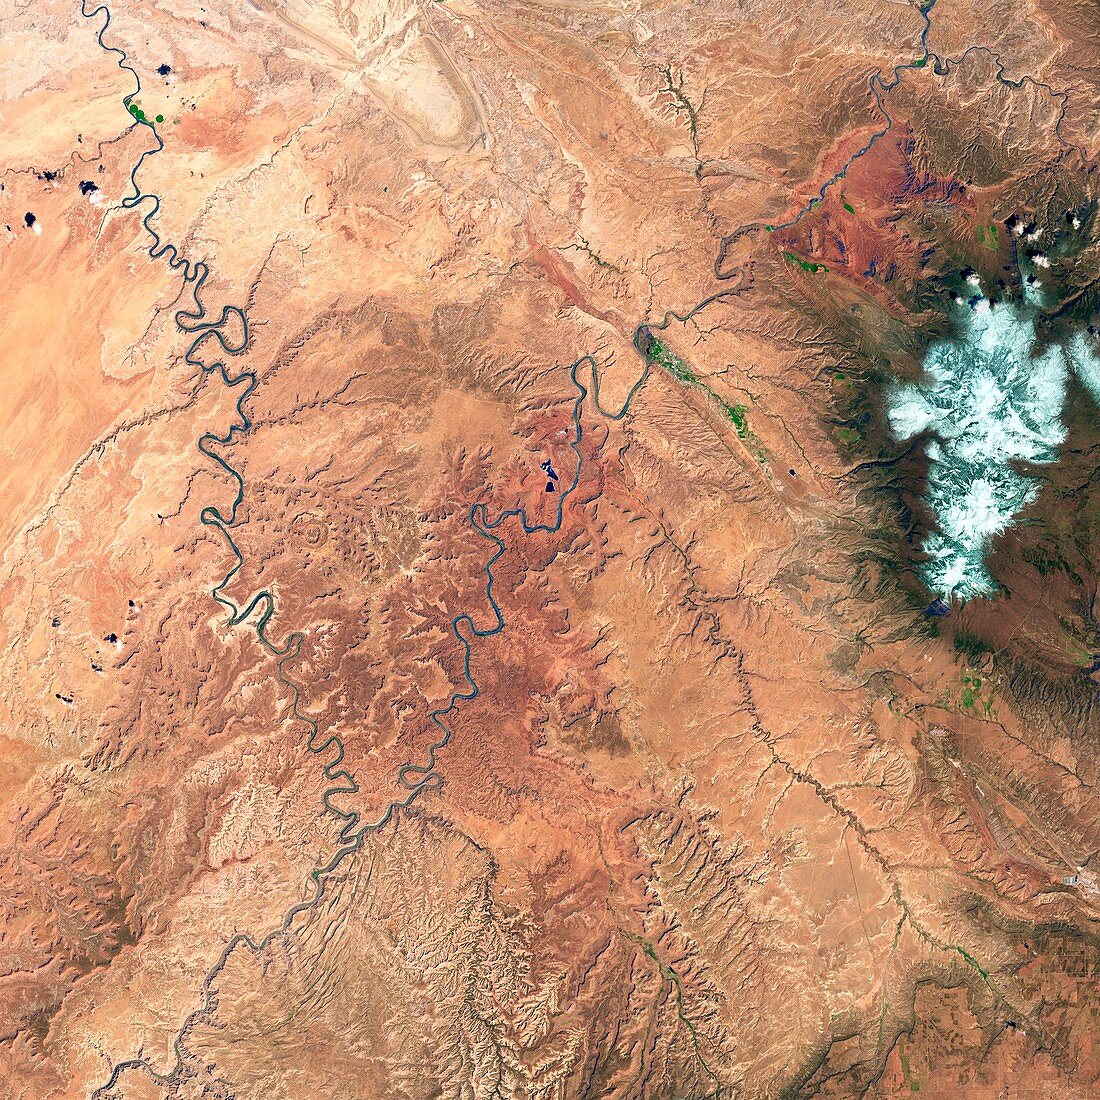 Canyonlands,Utah,satellite image